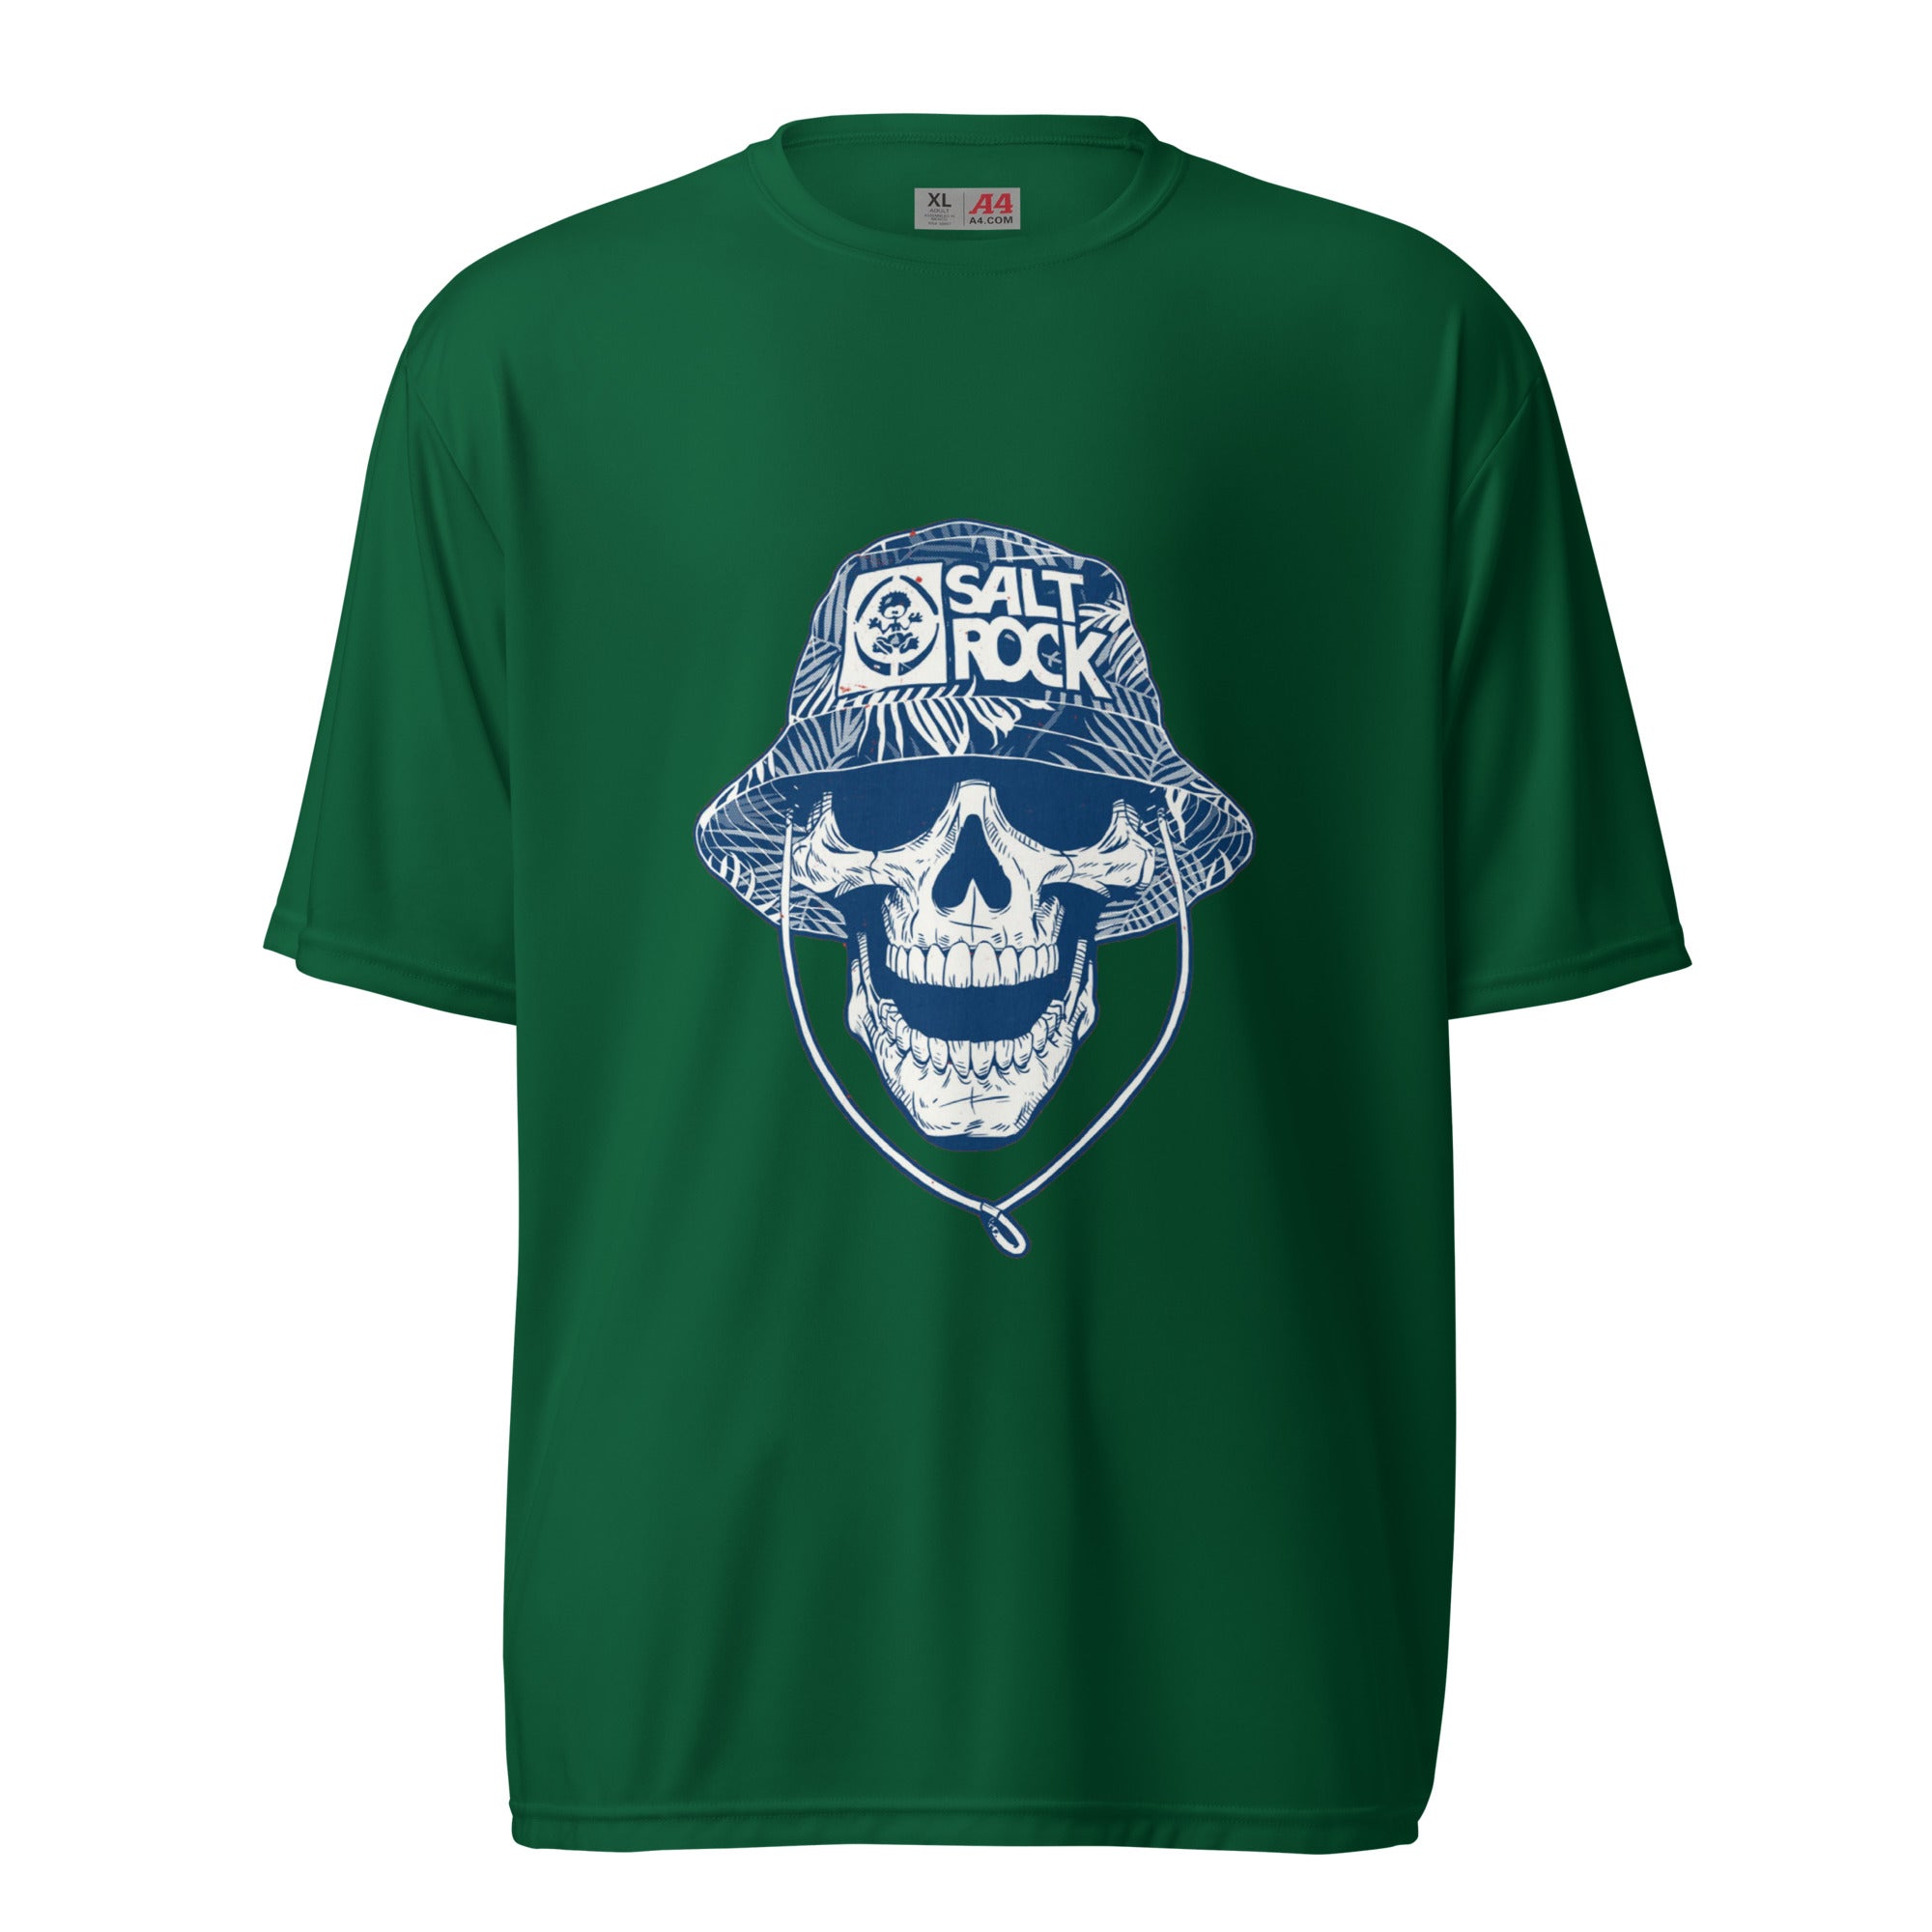 Men's crew neck t-shirt with Skull